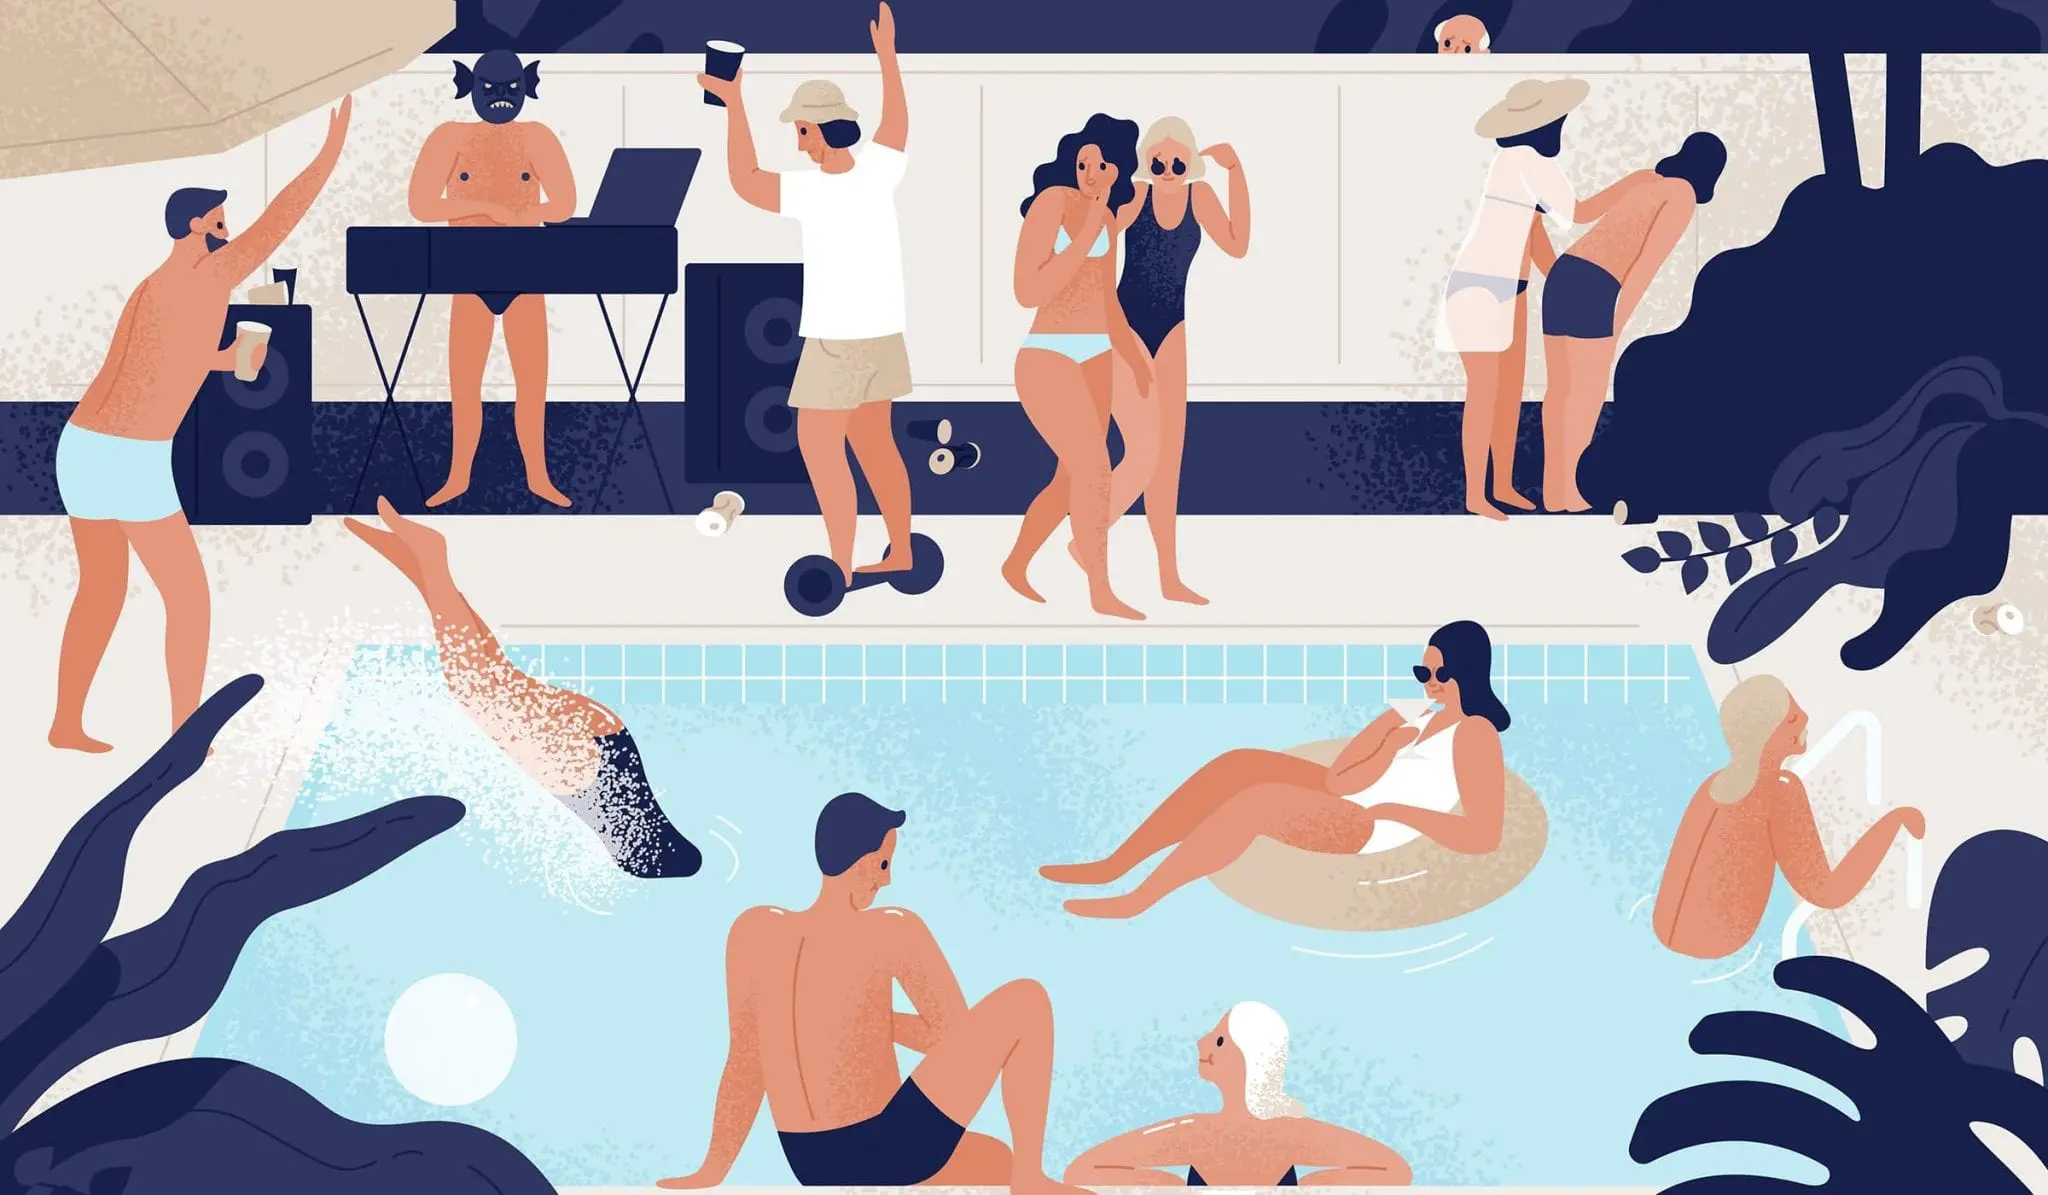 Pool Party Social Gathering Illustration